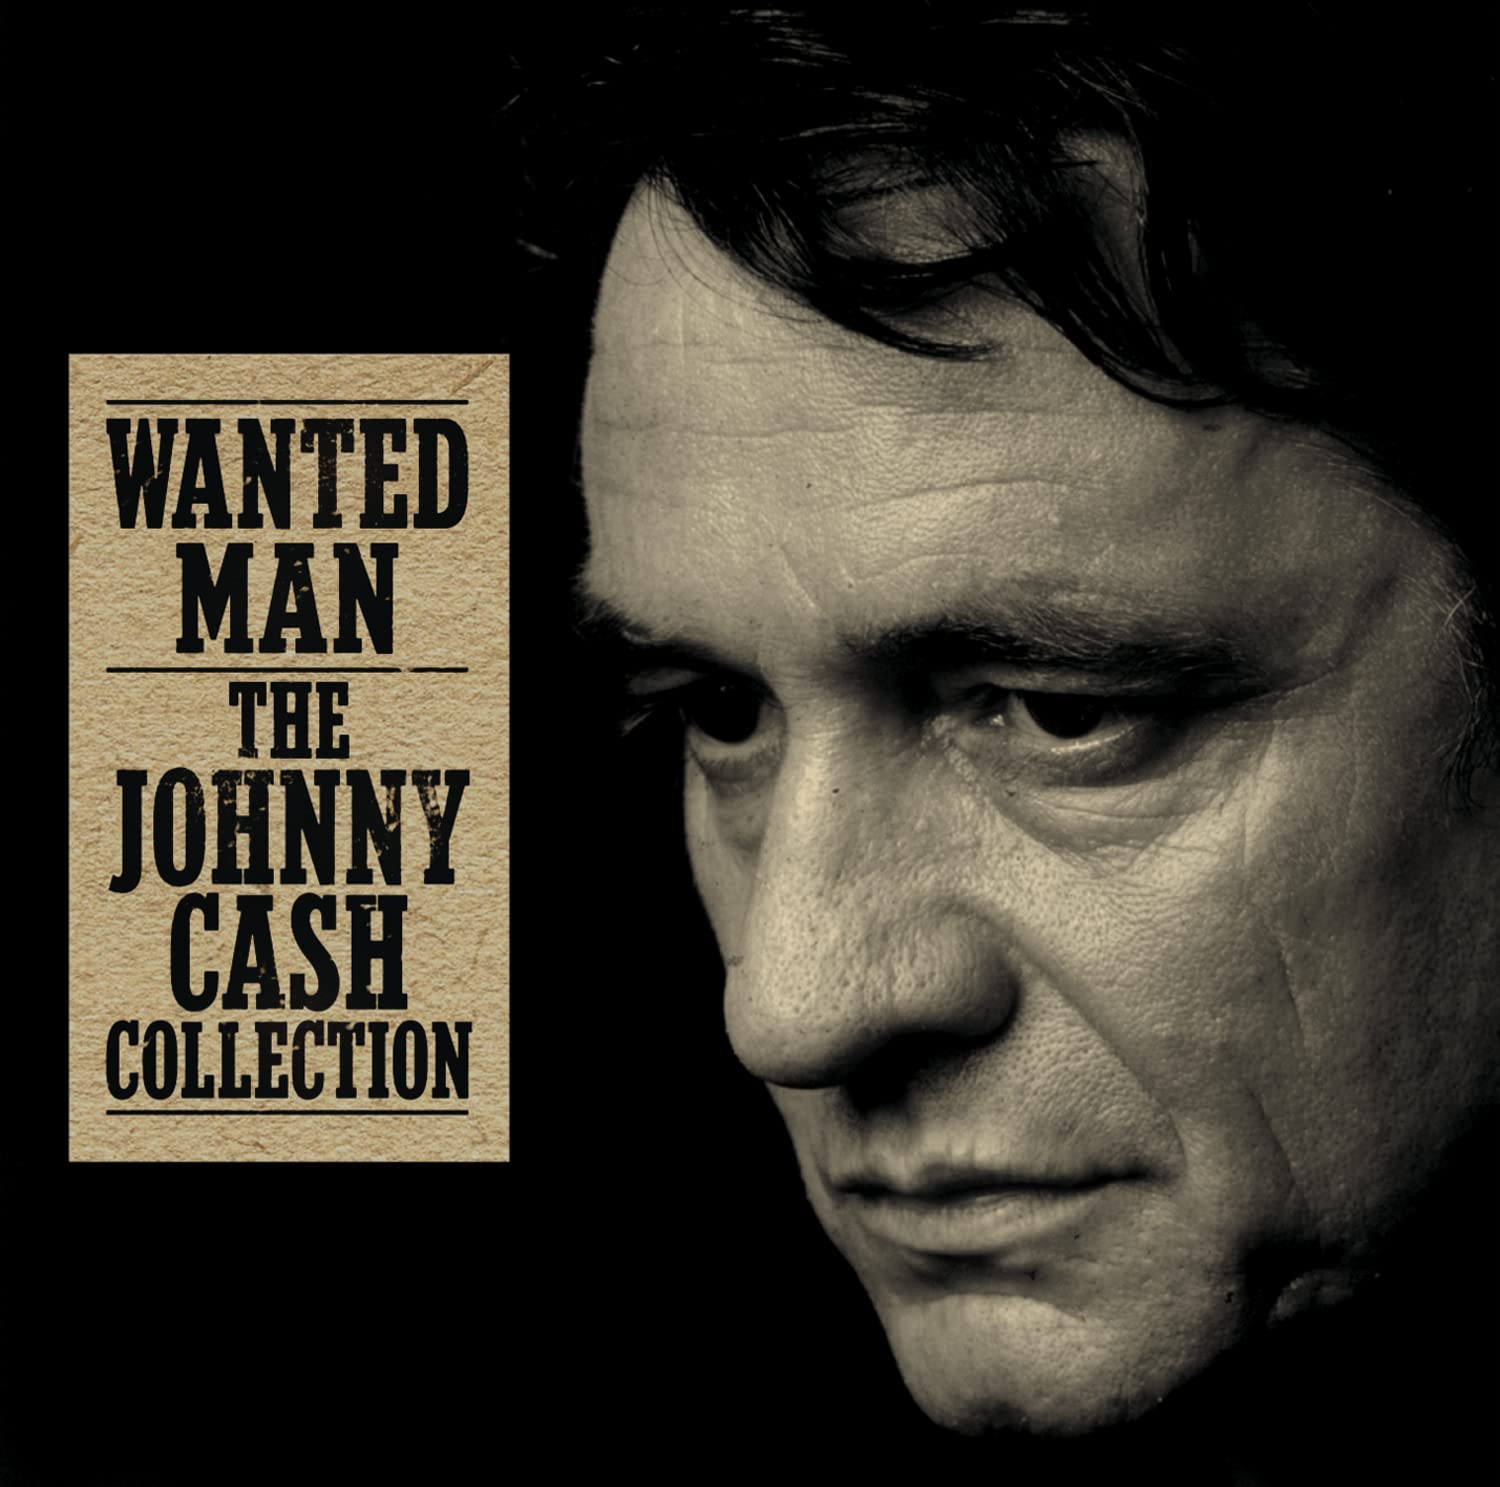 Wanted Man - Johnny Cash vinyl memories.